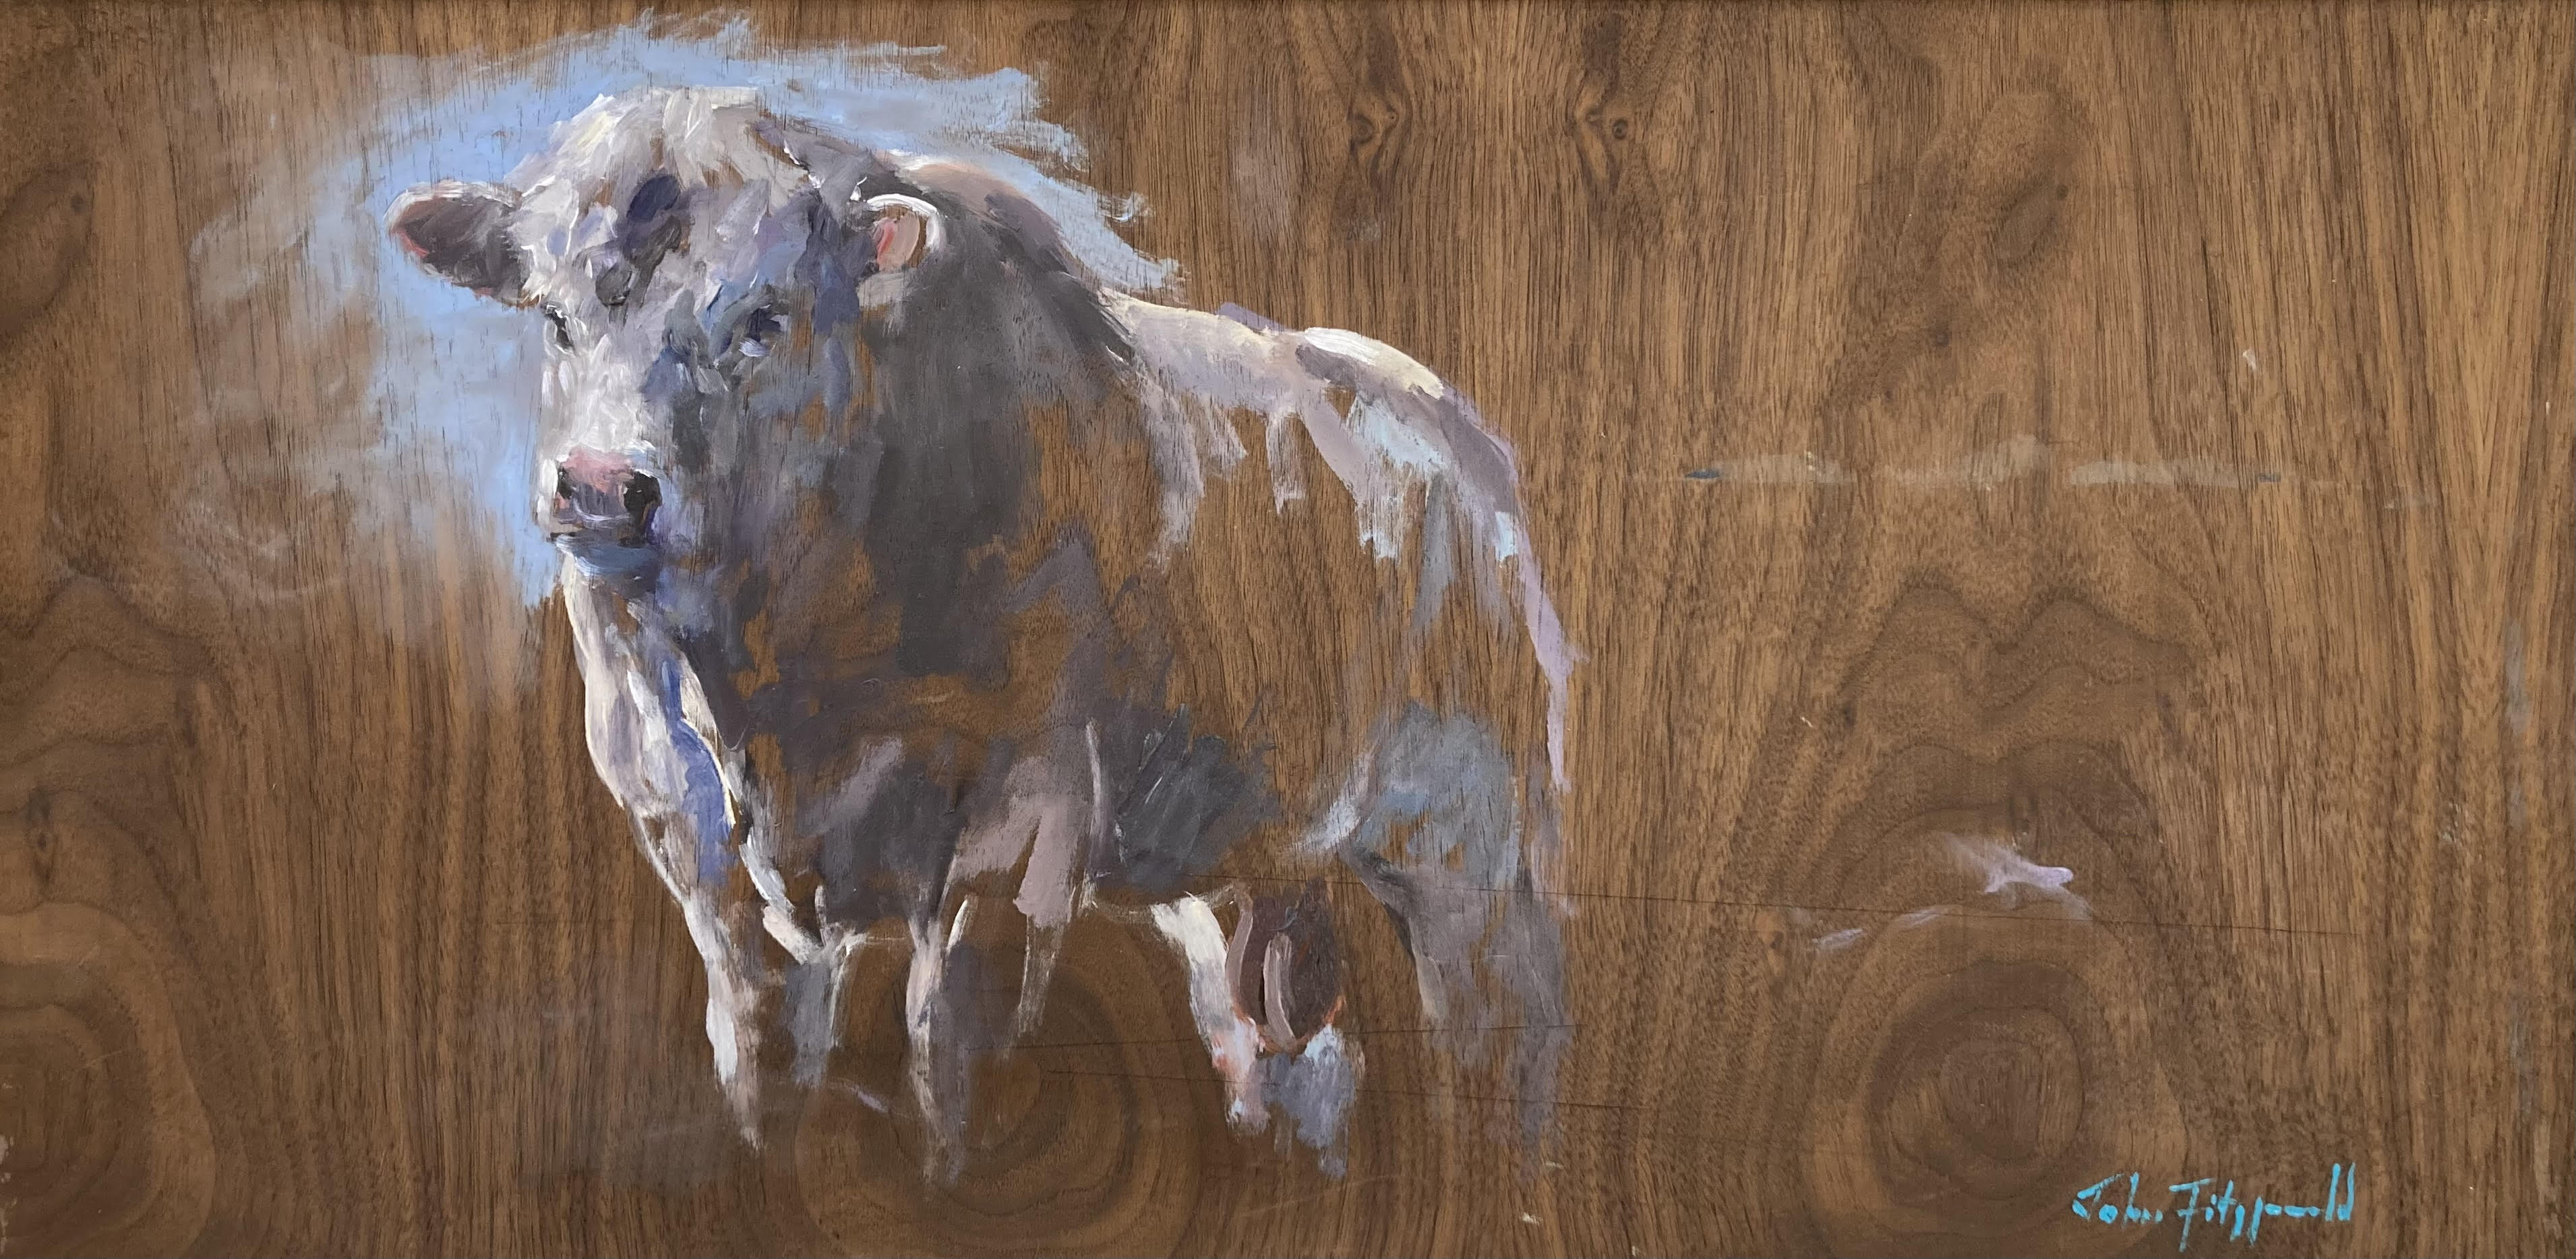 Charolais Bull on Wood by John Fitzgerald